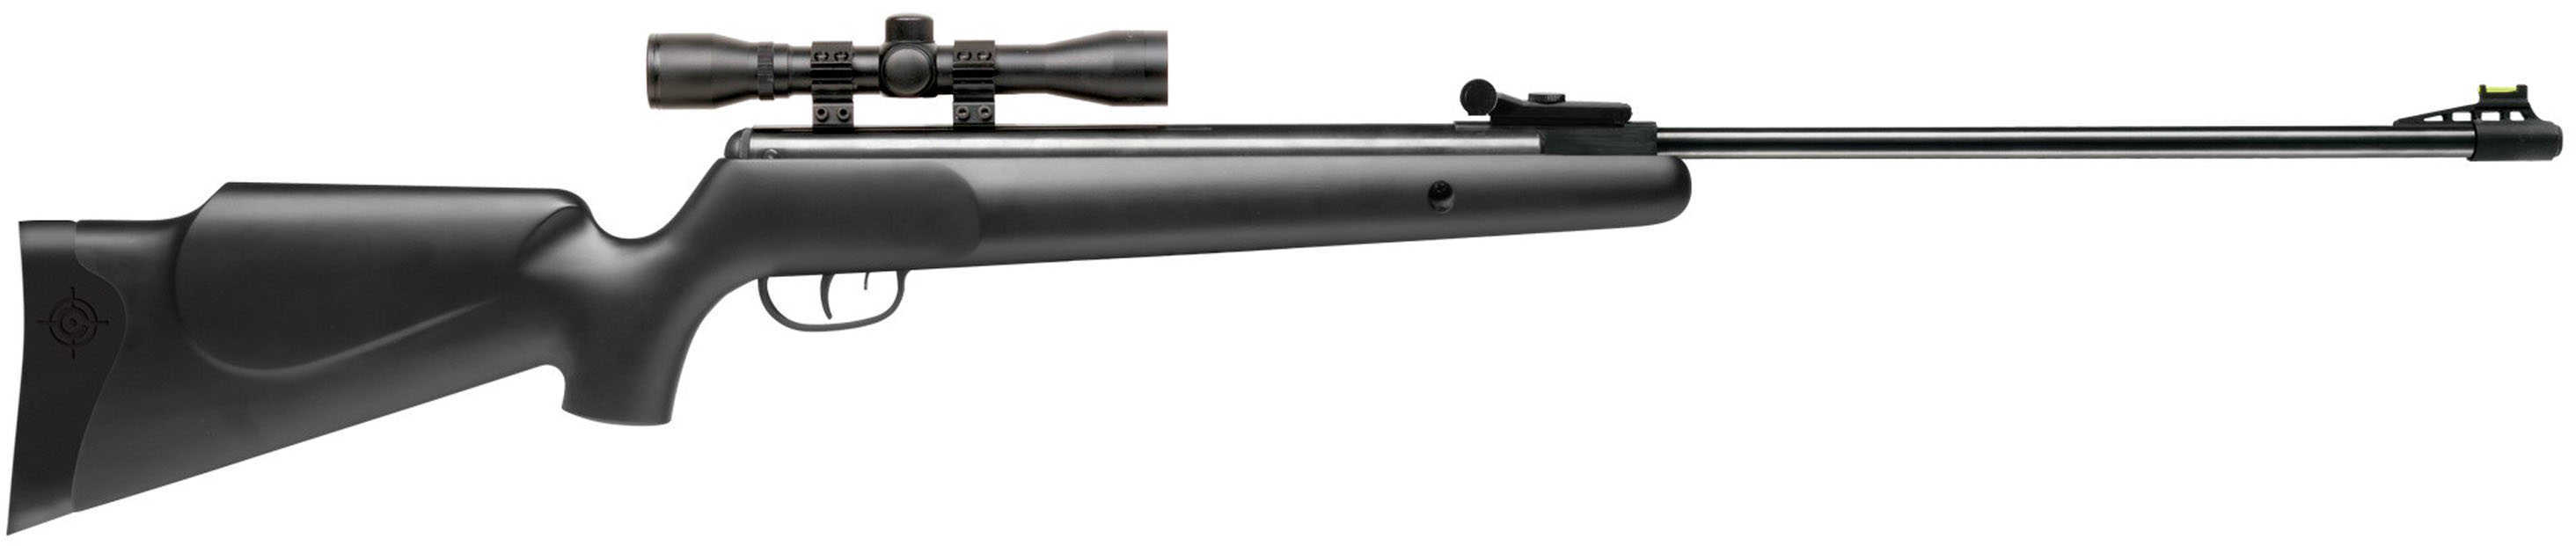 Crosman Phantom Np Synthetic Hunting Rifle 4x32 Scope .22 Airgun Md: CPNp22SX